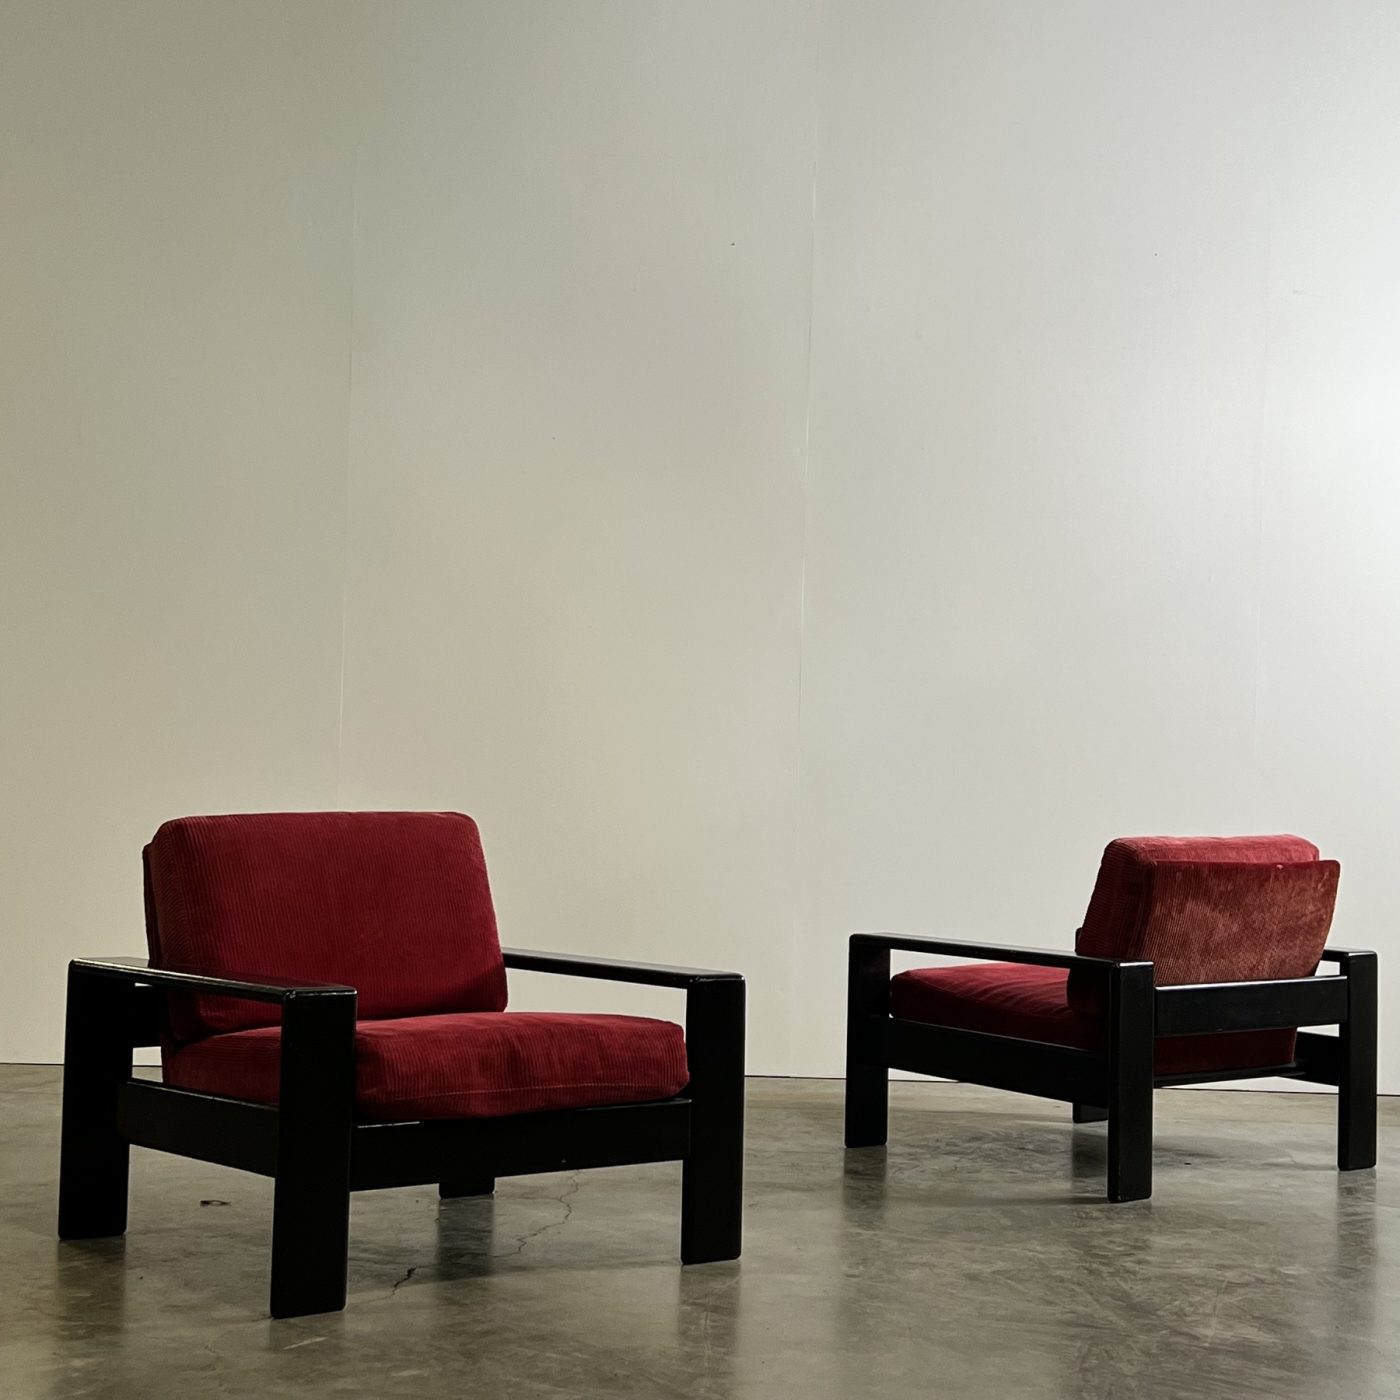 objet-vagabond-large-armchairs0002